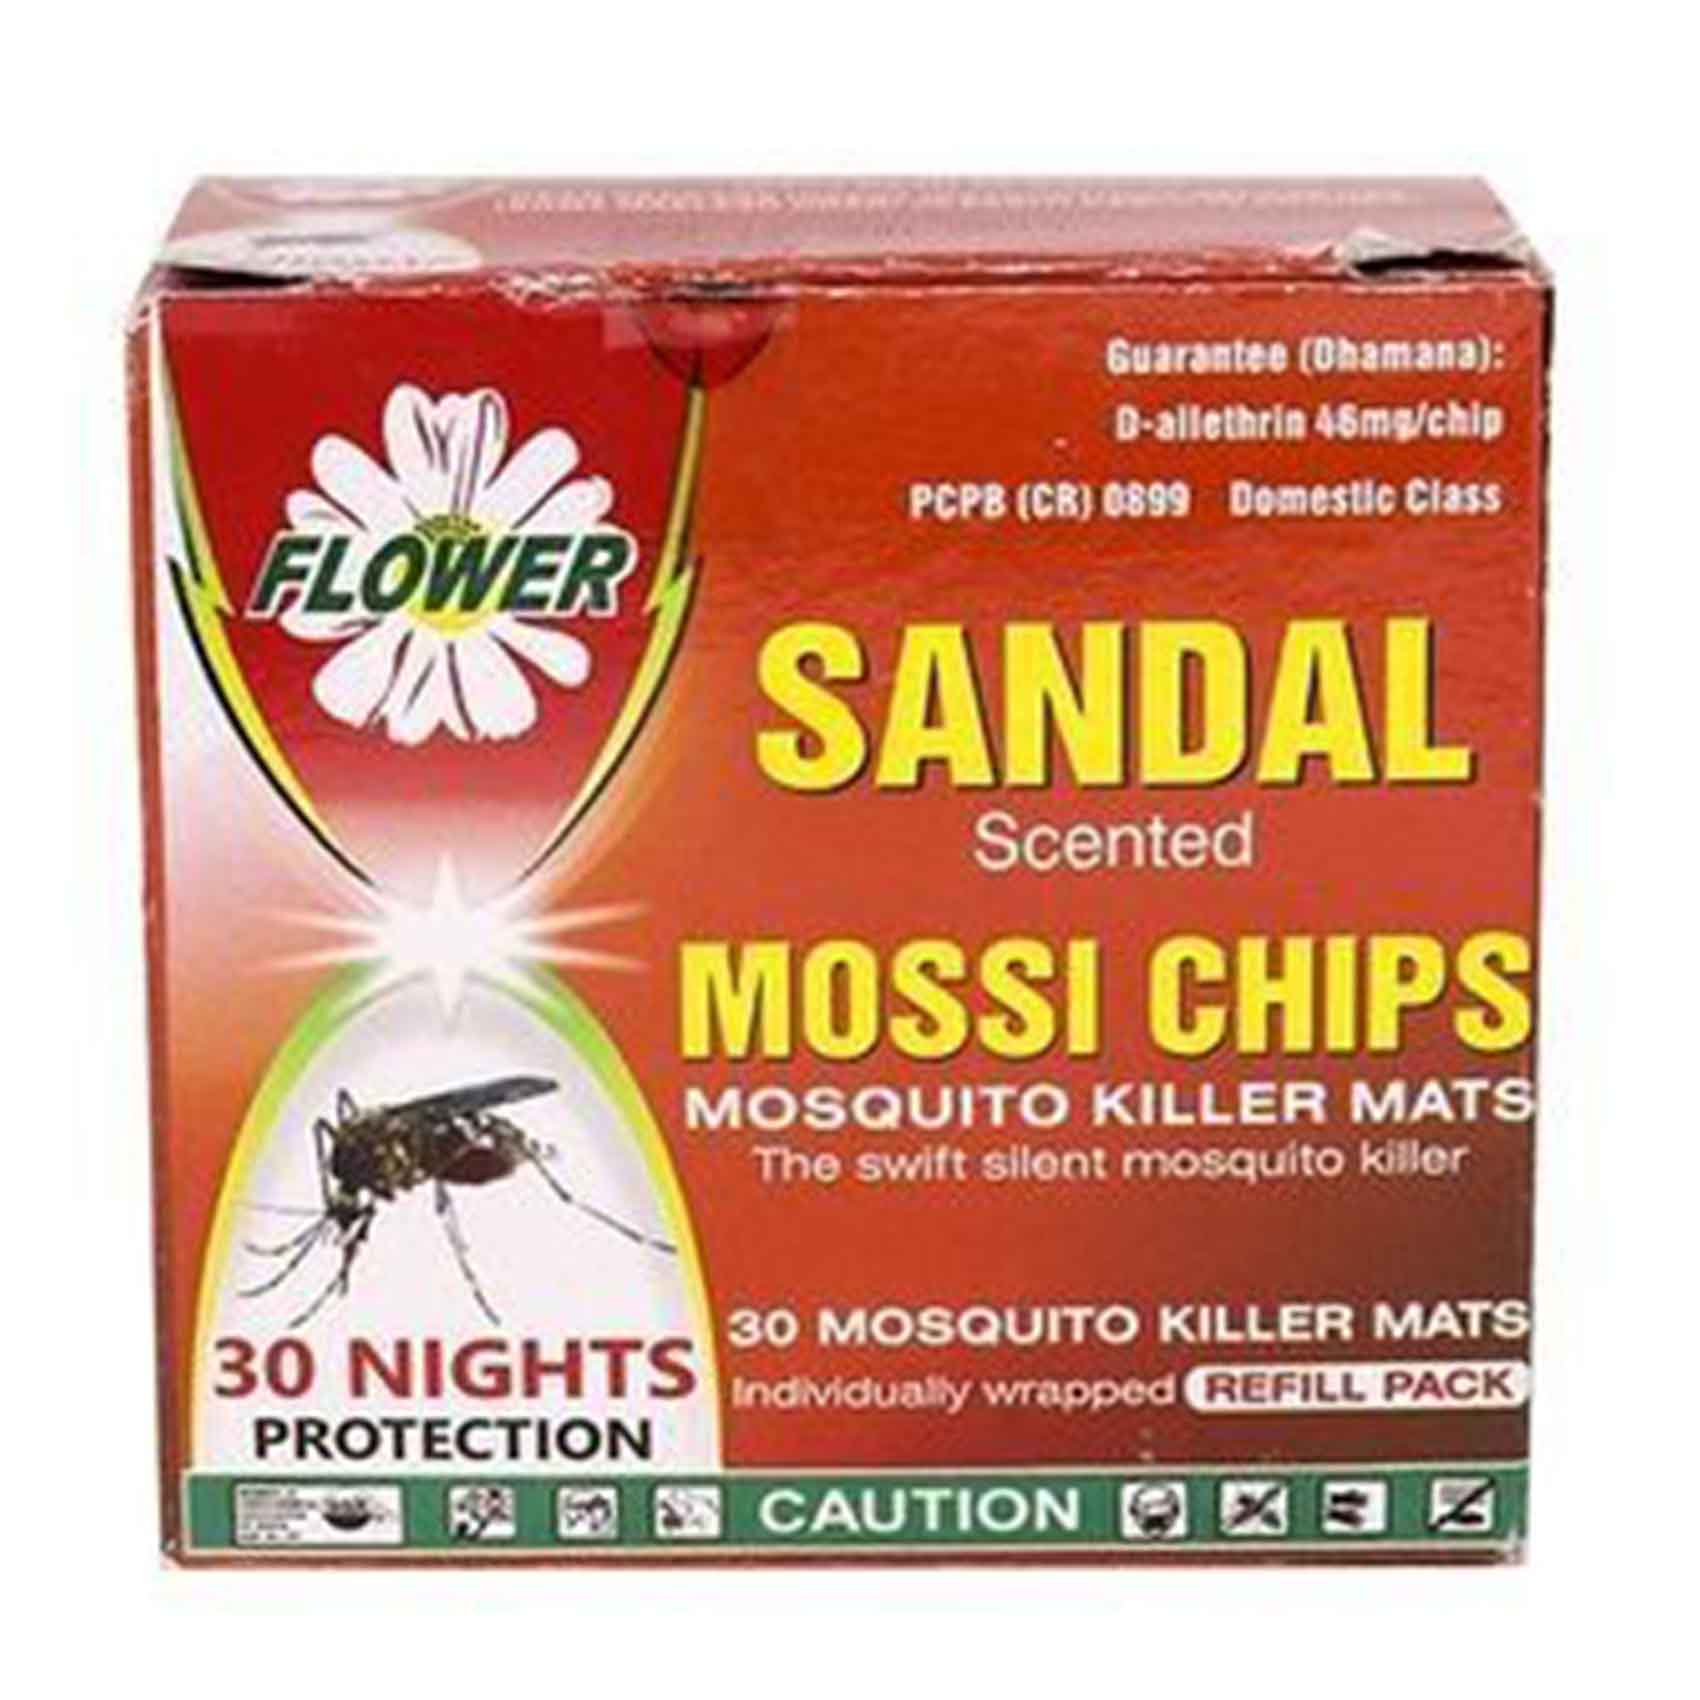 Flower Mossi Chip Sandal 30G